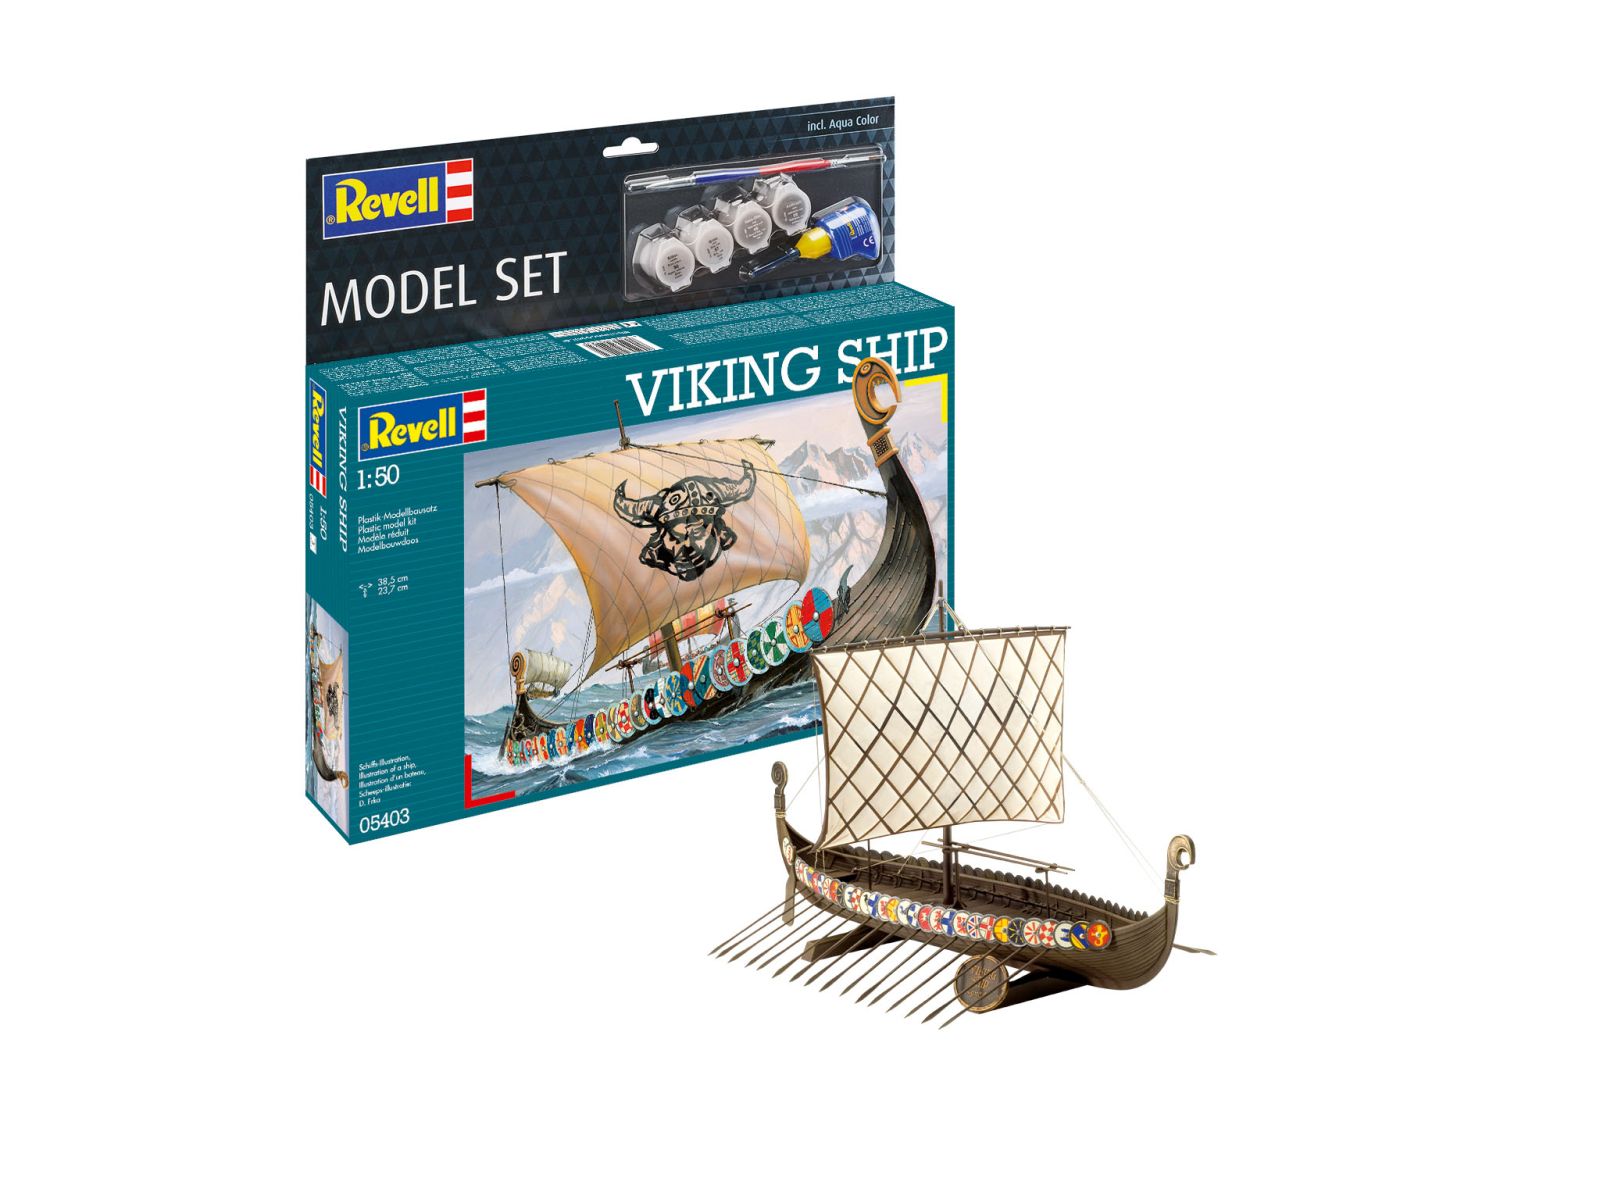 Revell 65403 - Model Set Viking Ship